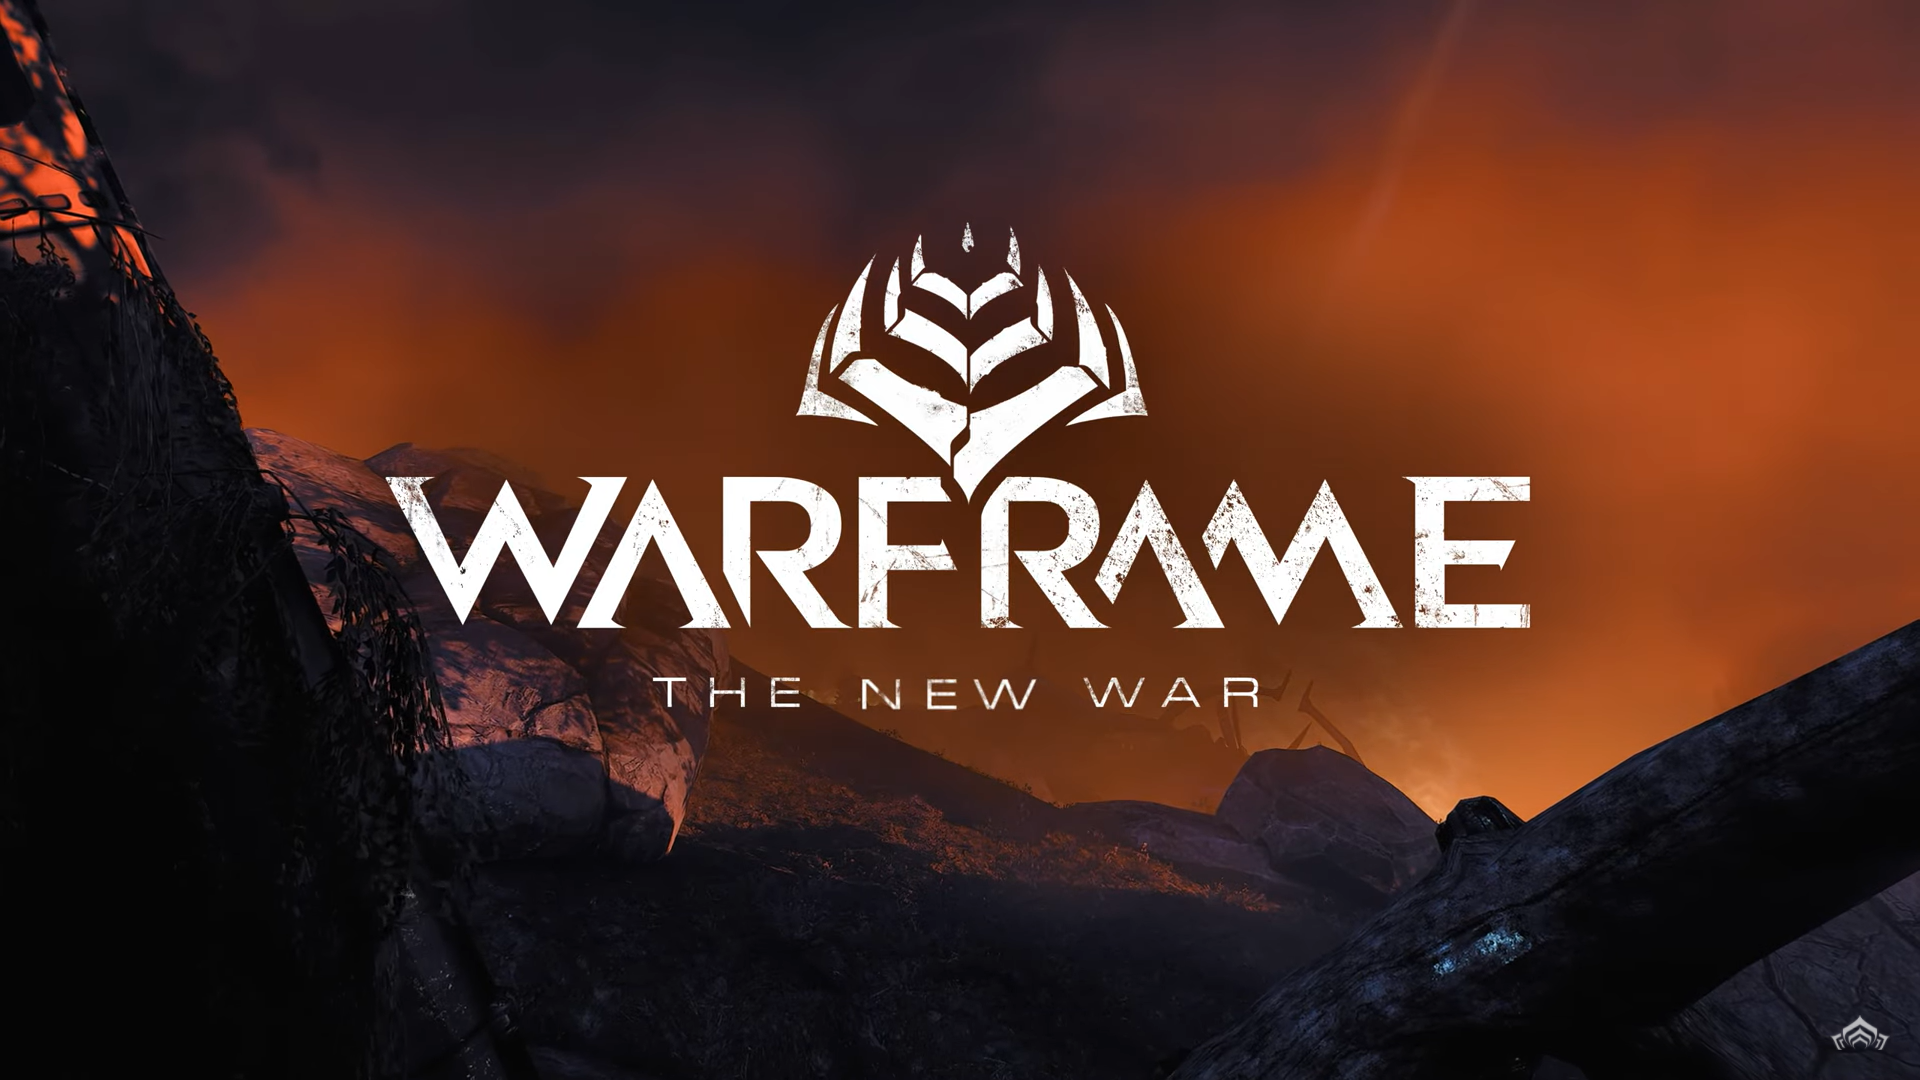 The new war для warframe фото 33